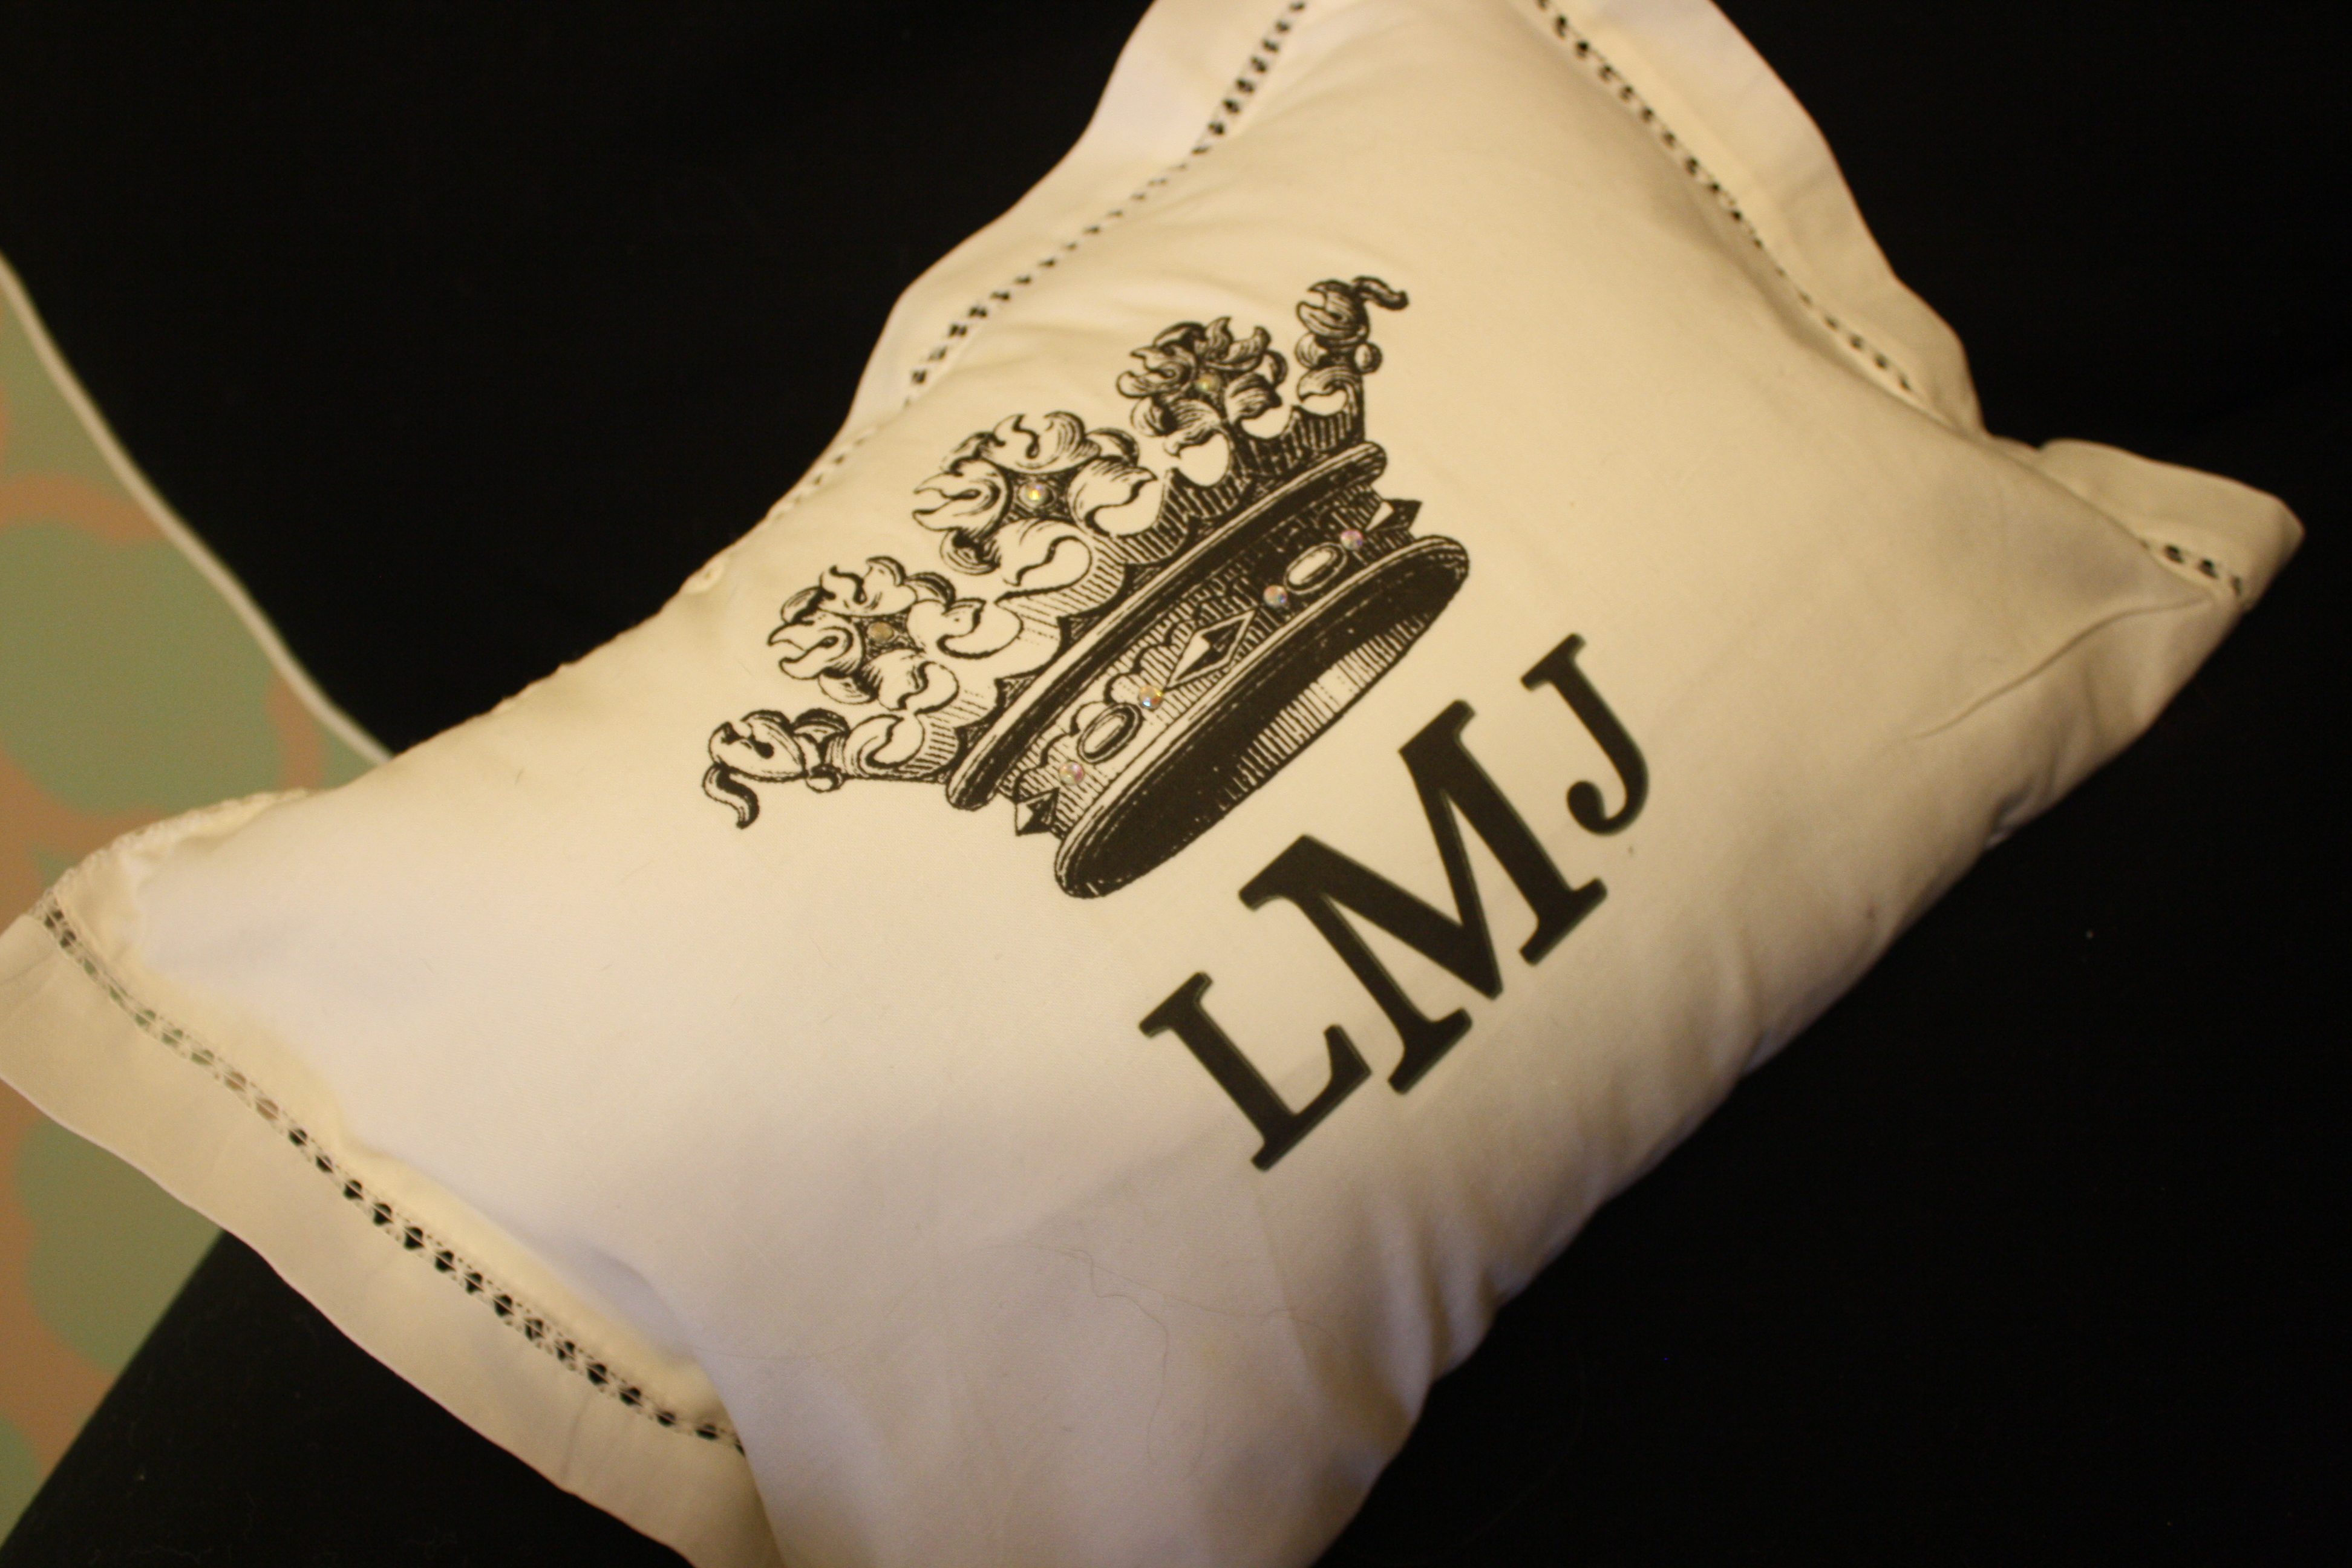 Monogrammed "LMJ" Pillow